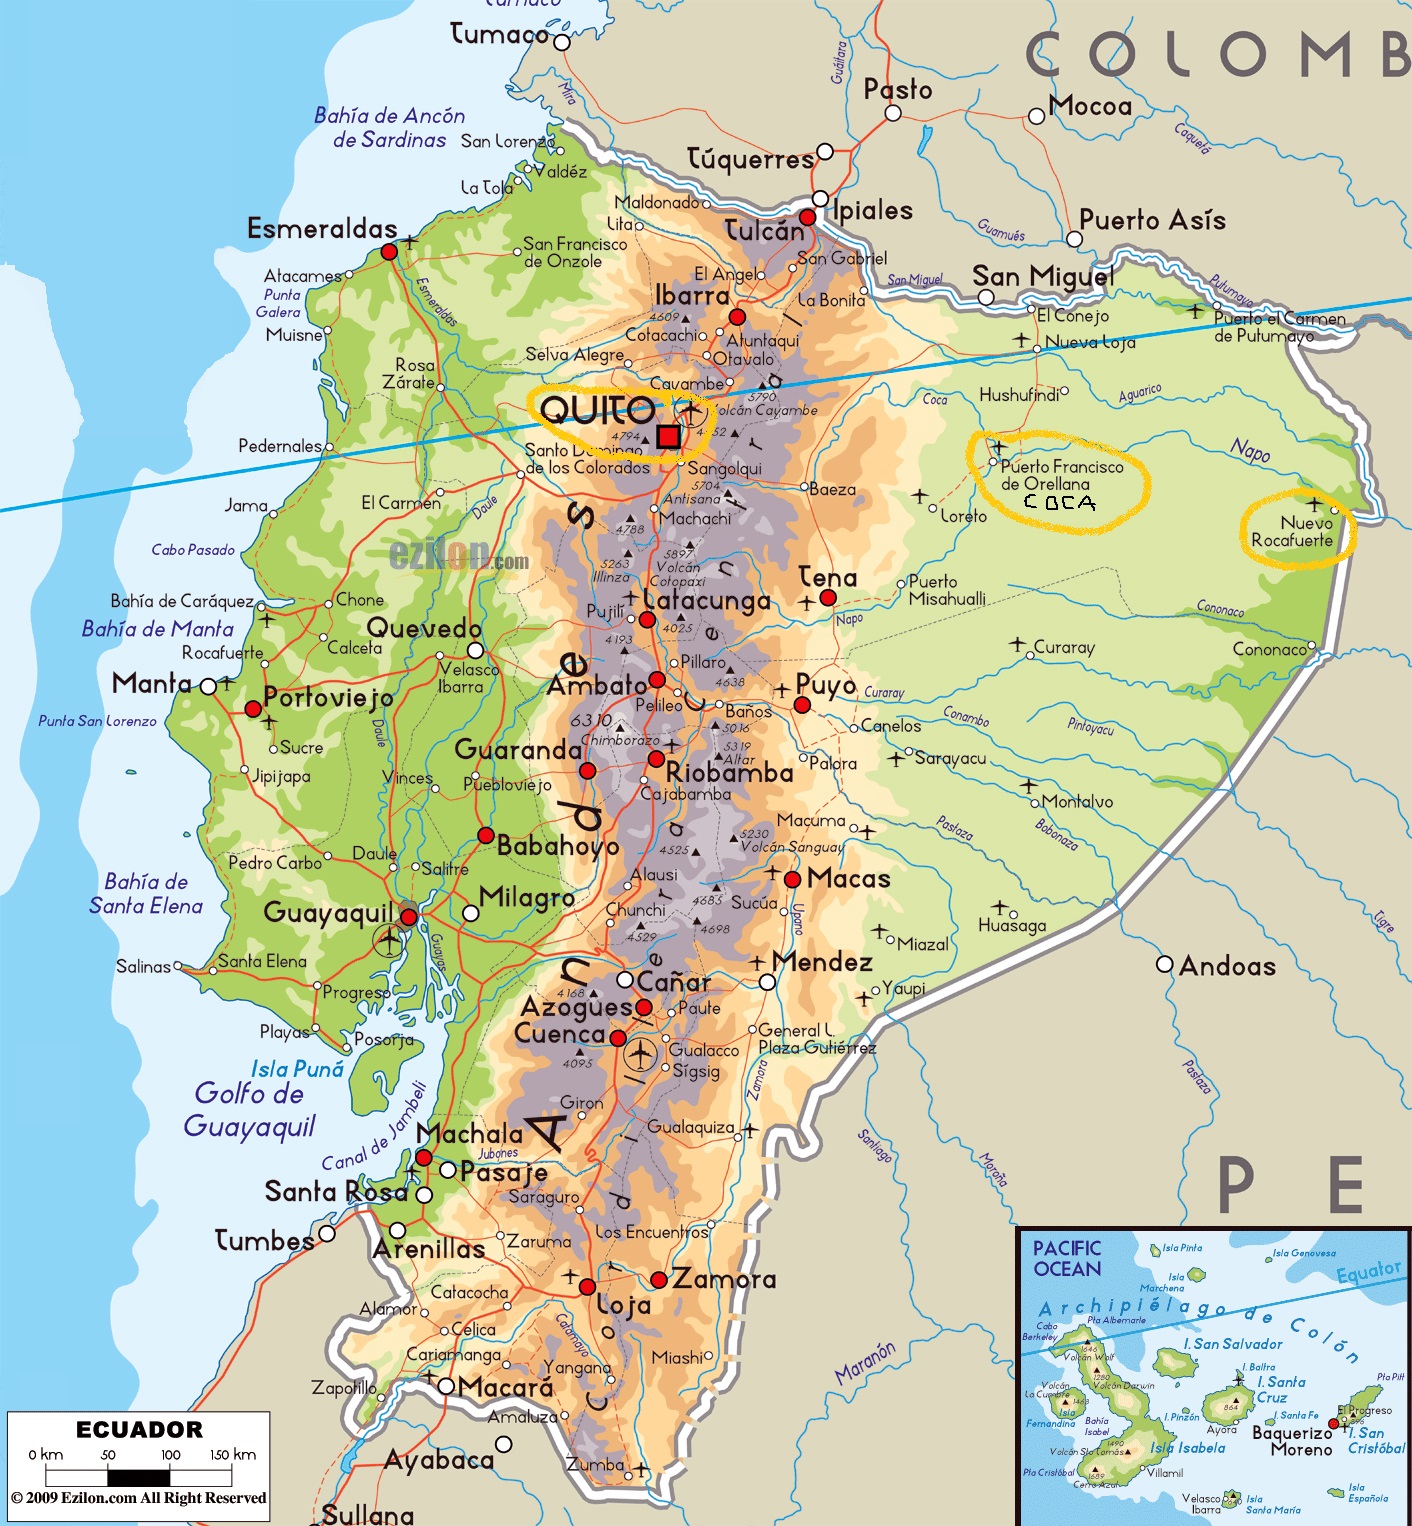 Karte von Ecuador (c) httpswww.mapas-del-mundo.net